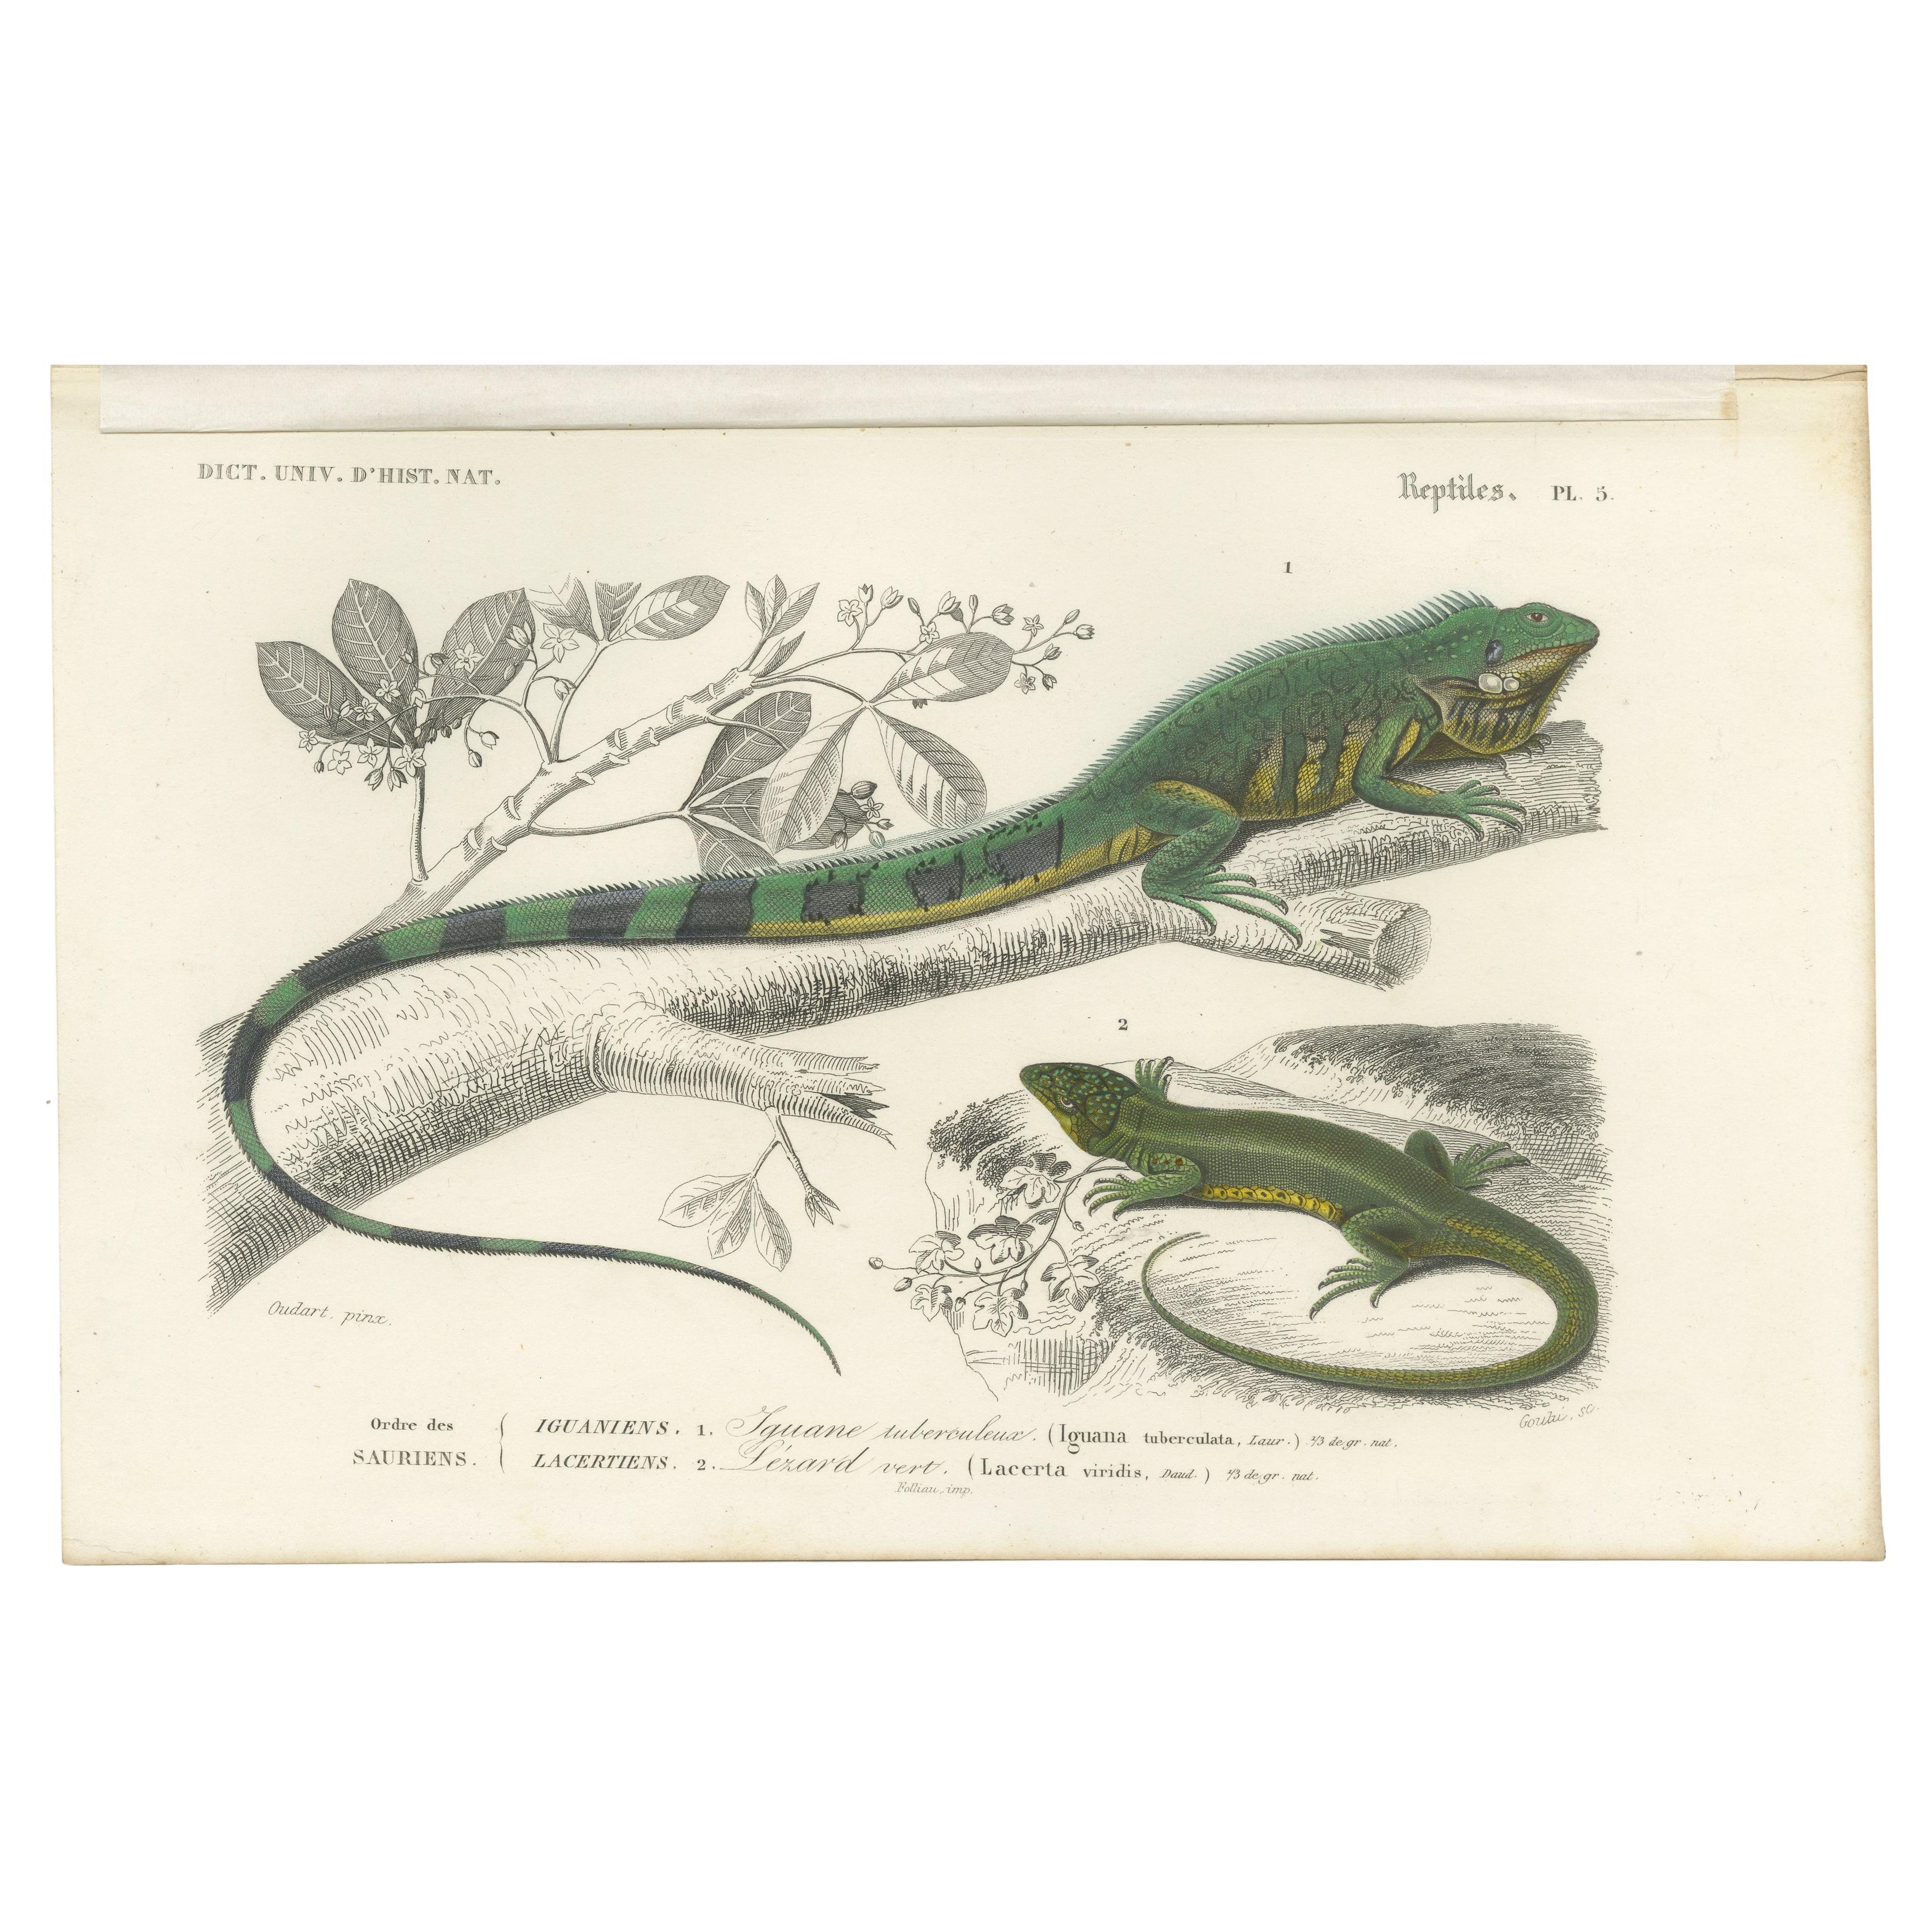 Antique Print of the Green Iguana and European Green Lizard